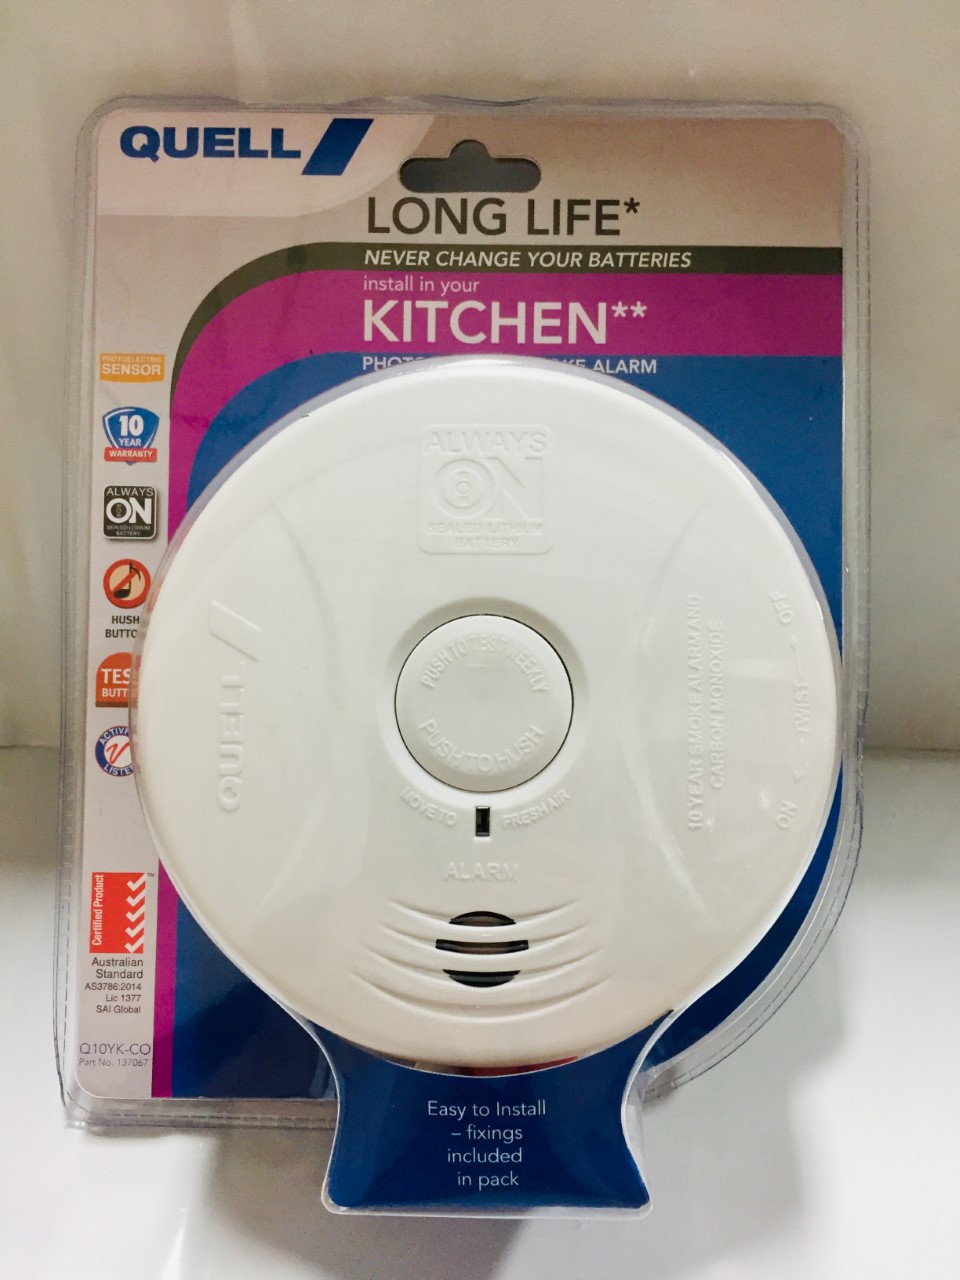 Quell Smoke Alarm & Carbon Monoxide Alarm Long Life Kitchen Q10YK-CO 137067 